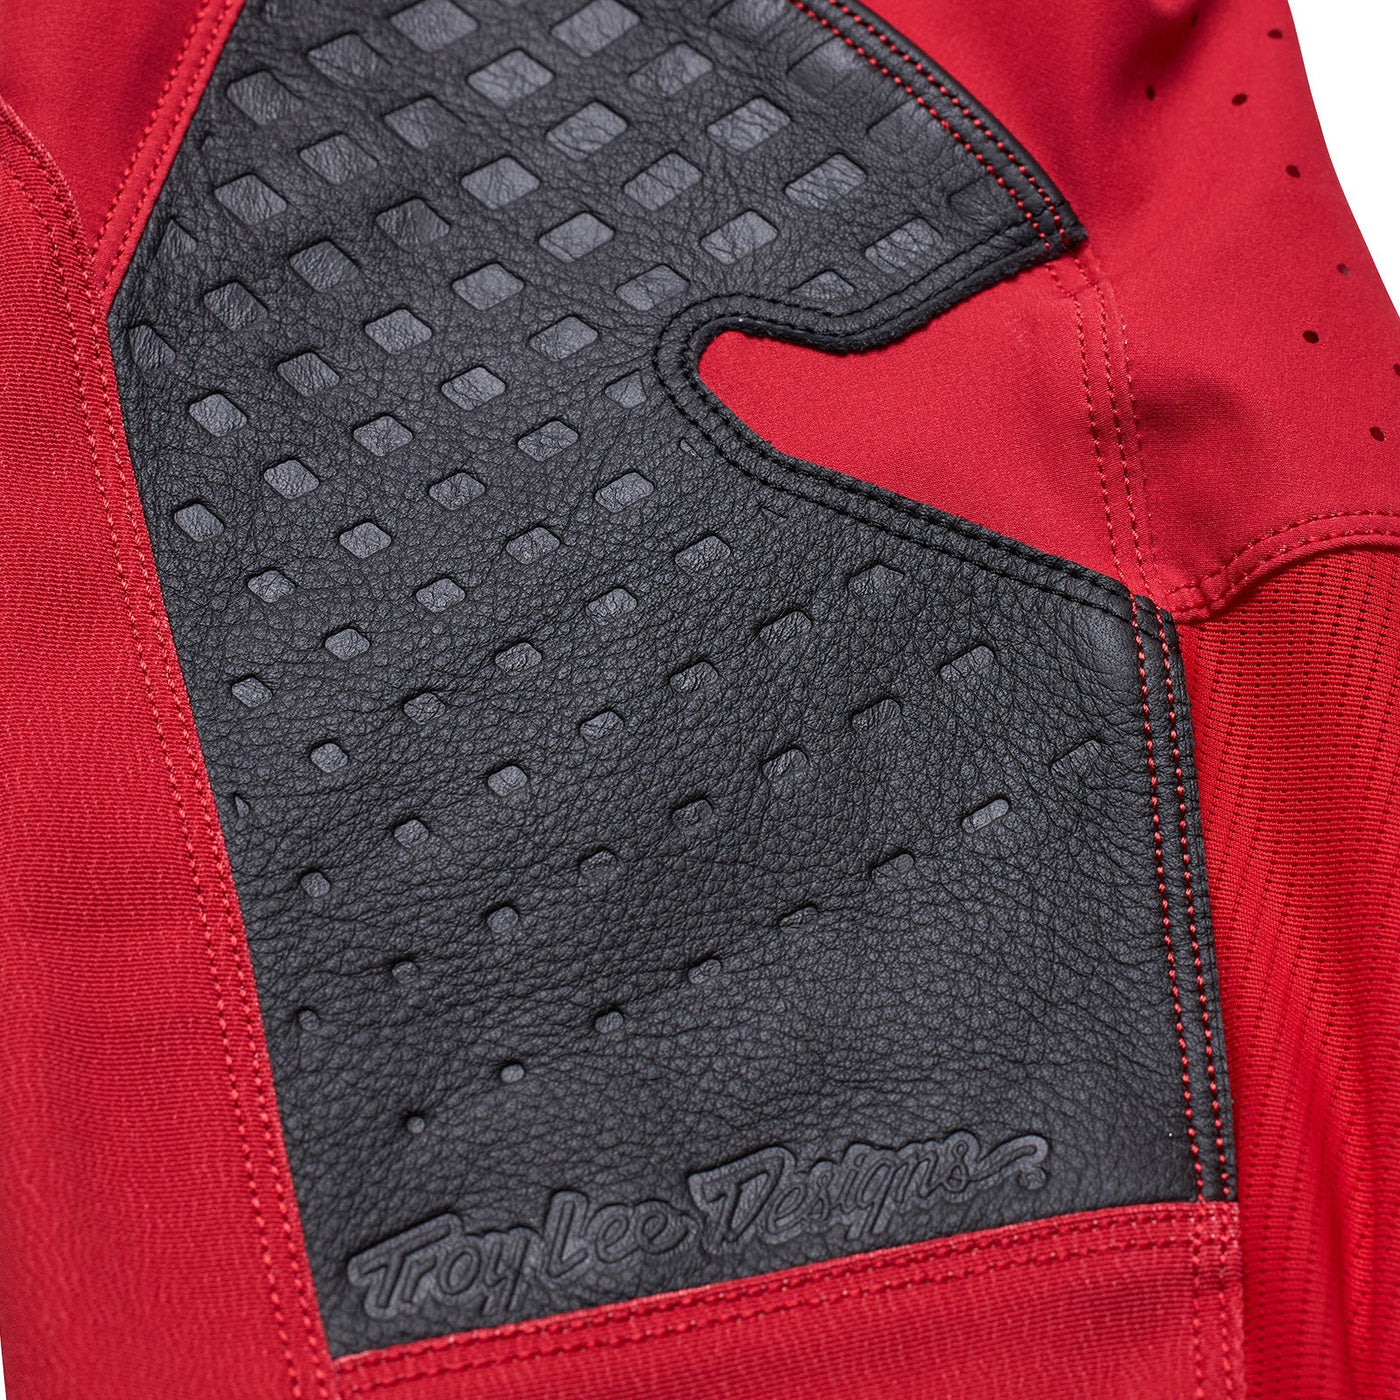 Troy Lee Designs Pantalón De Moto SE Pro Pinned Rojo-ProCircuit